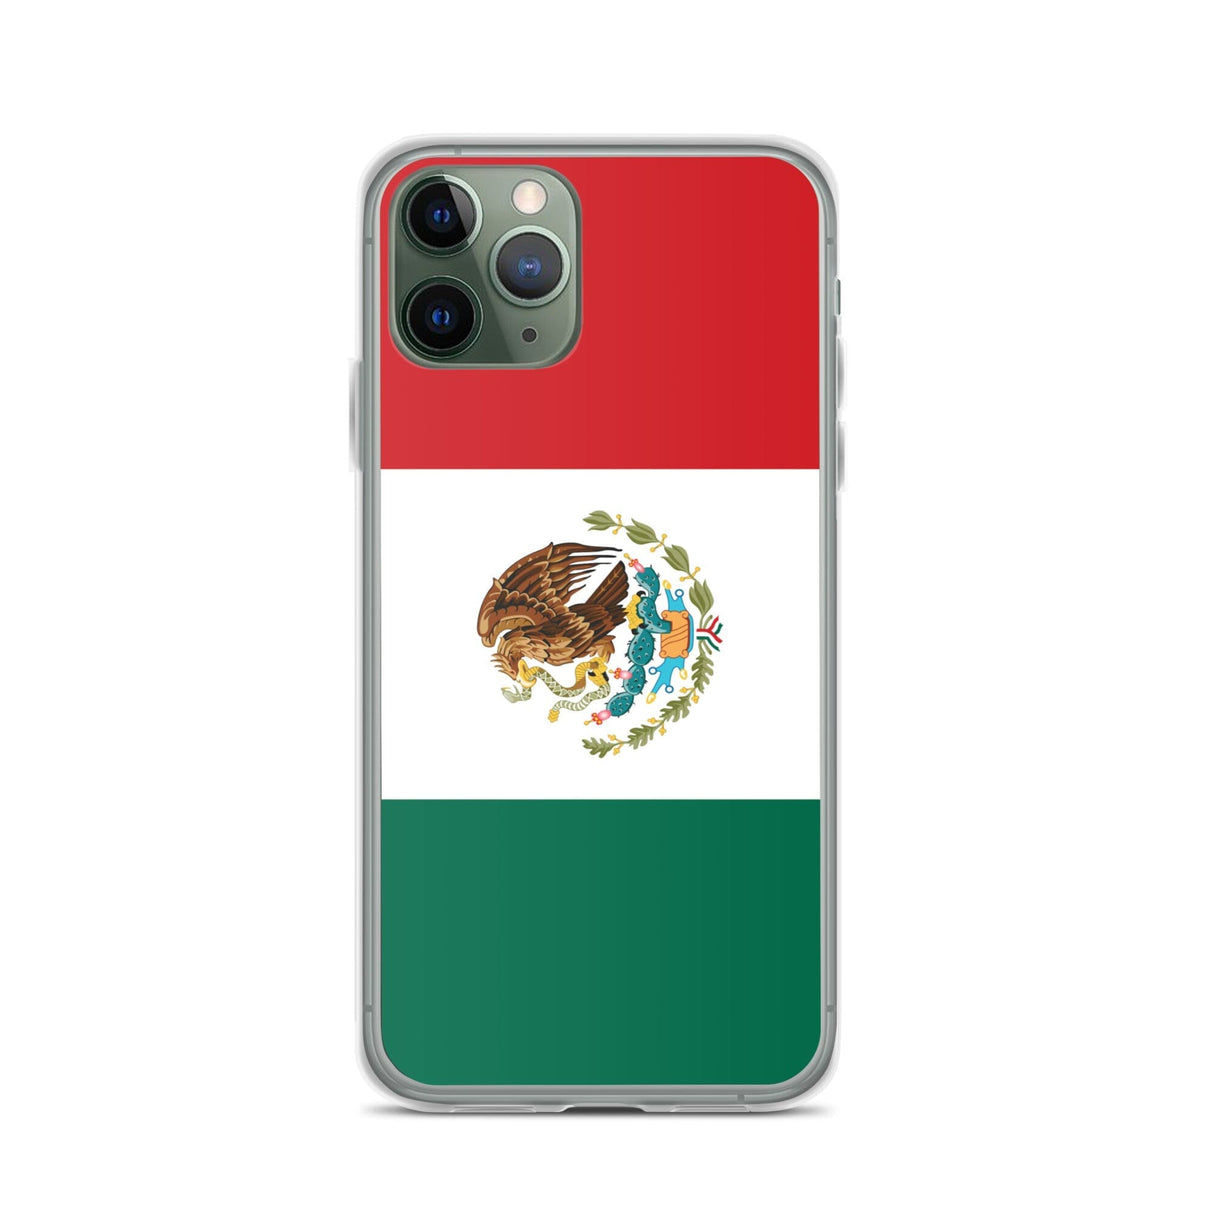 Flag of Mexico iPhone Case - Pixelforma